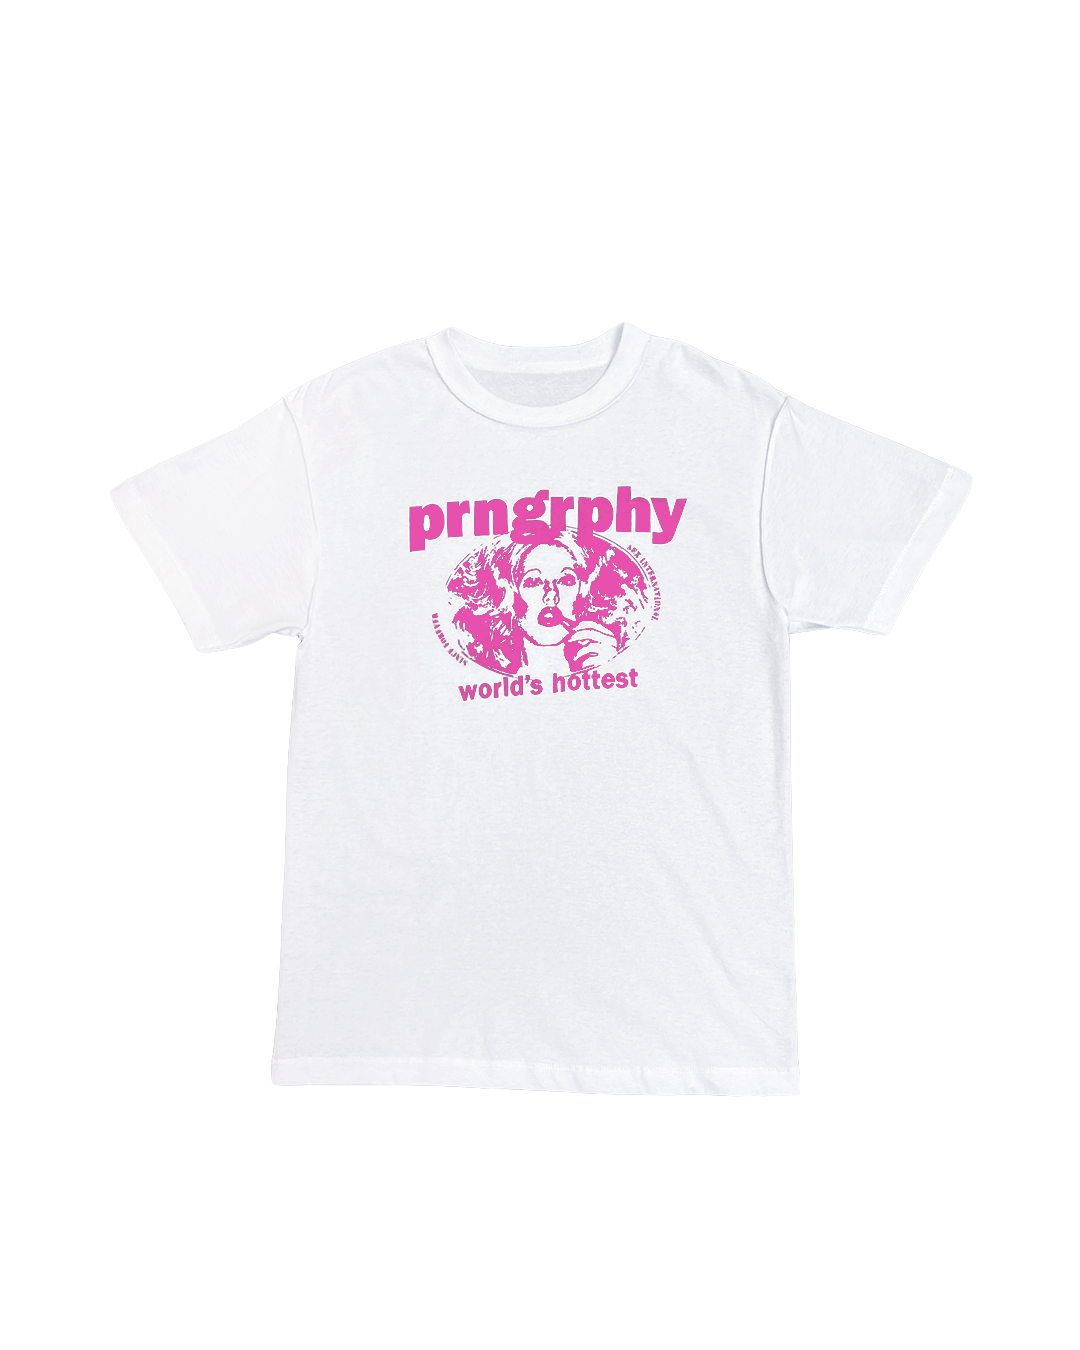 Prngrphy - 'World's Hottest' Pink / Black T-Shirt